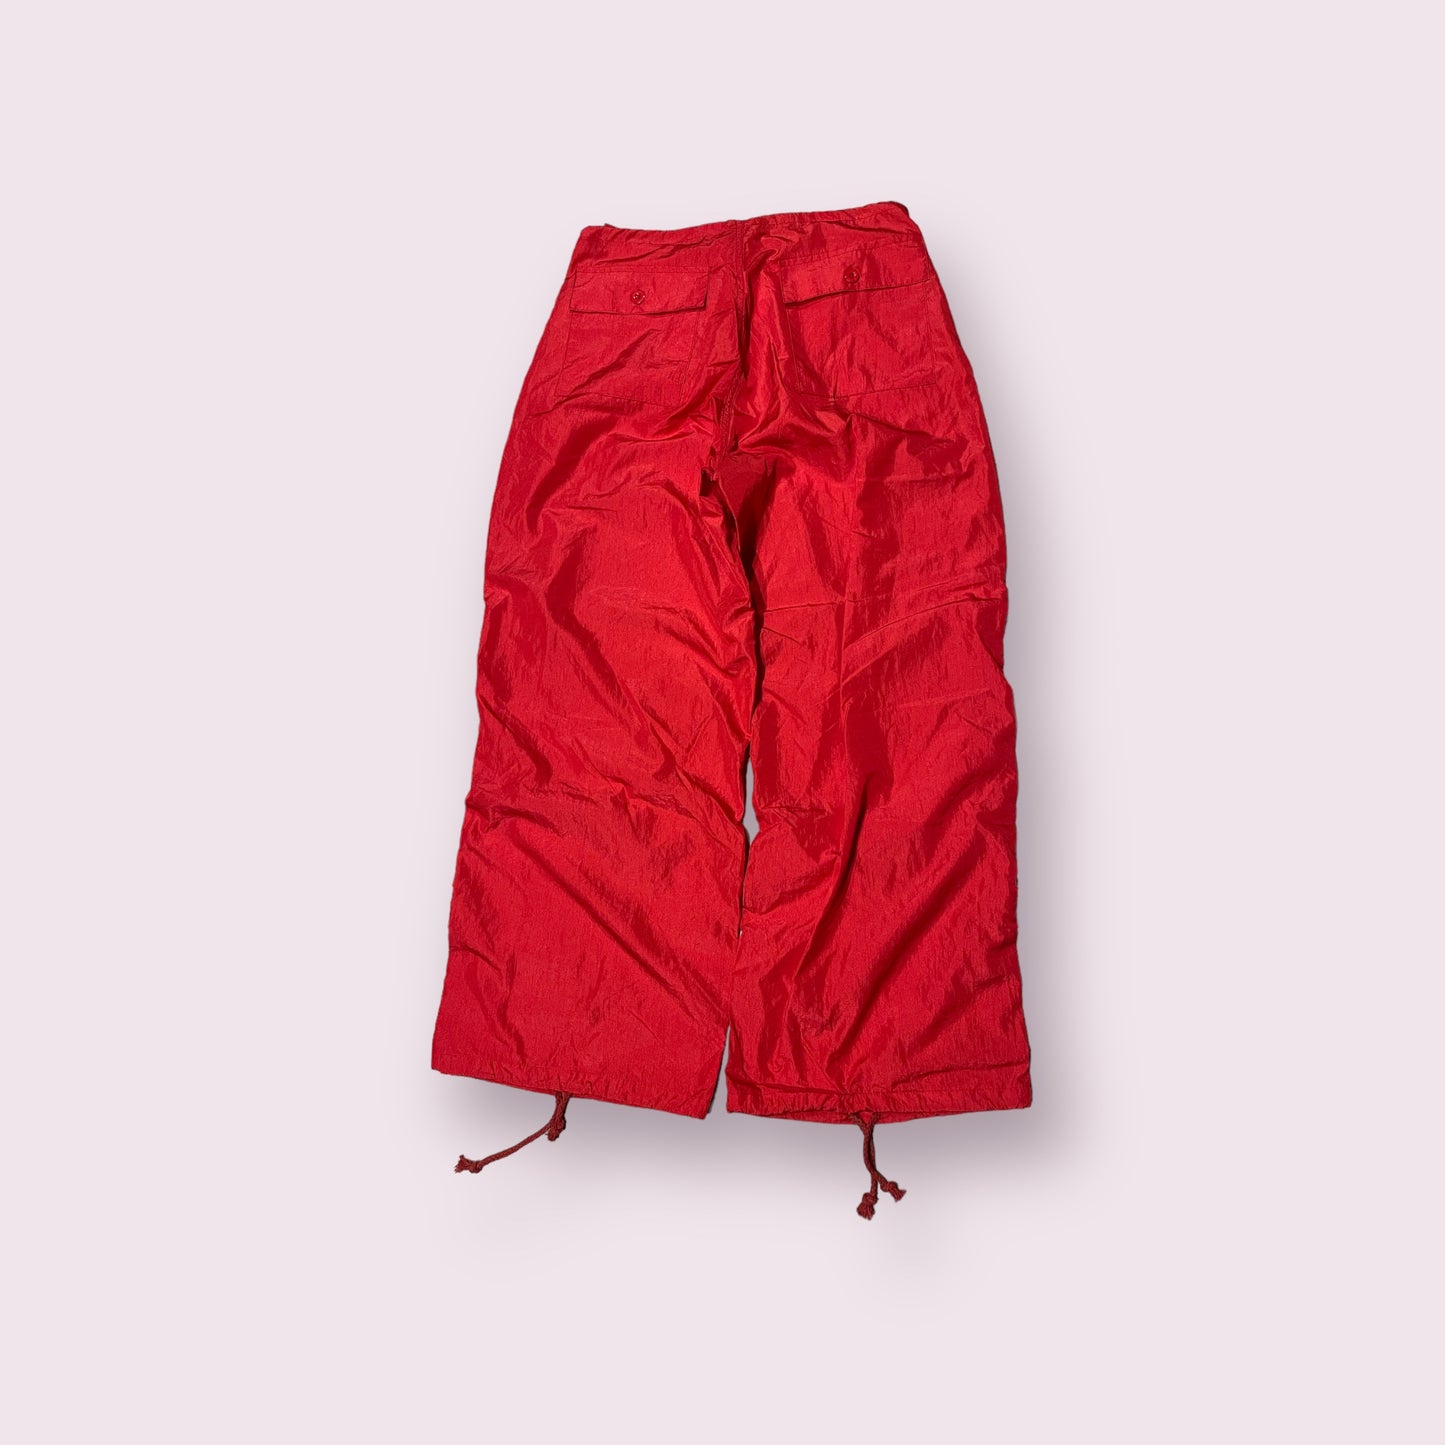 Edikted red parachute pants